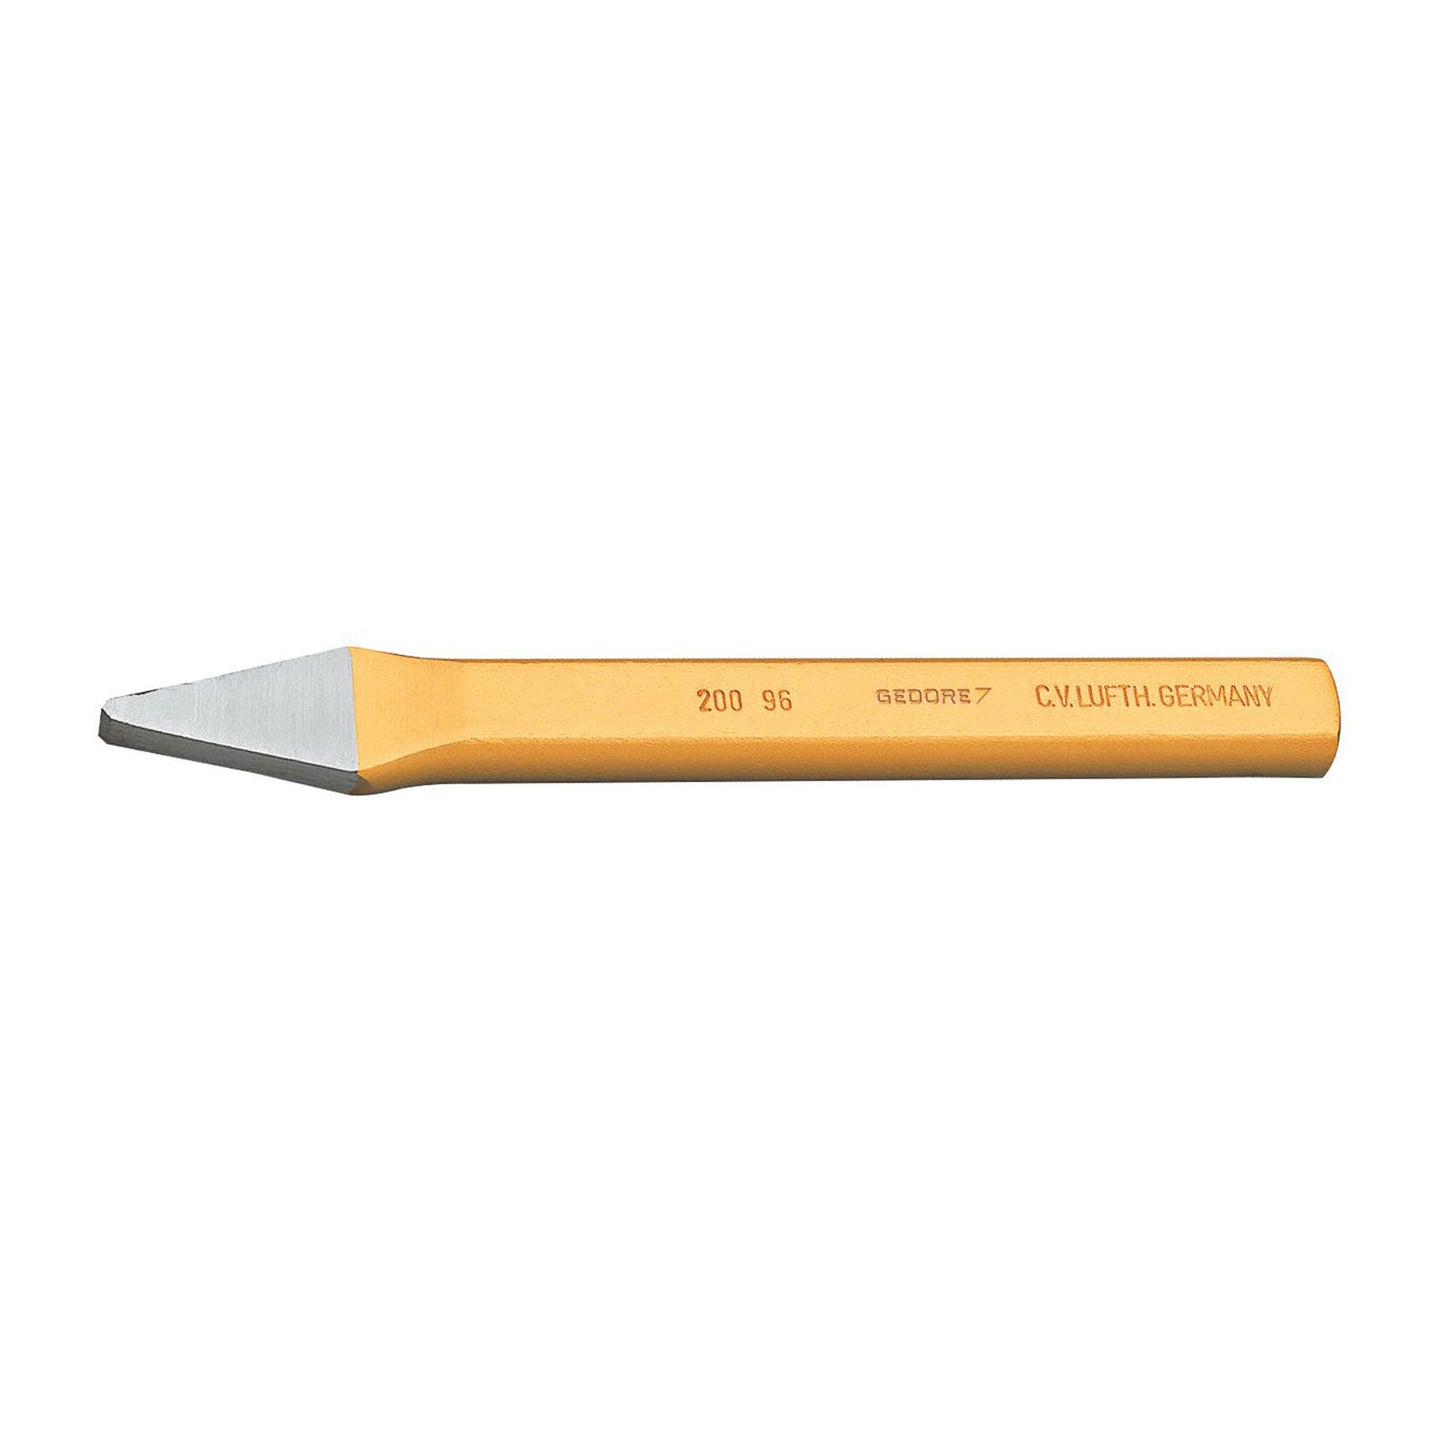 GEDORE 96-125 - Sharp chisel 125x14x9 mm (8702180)